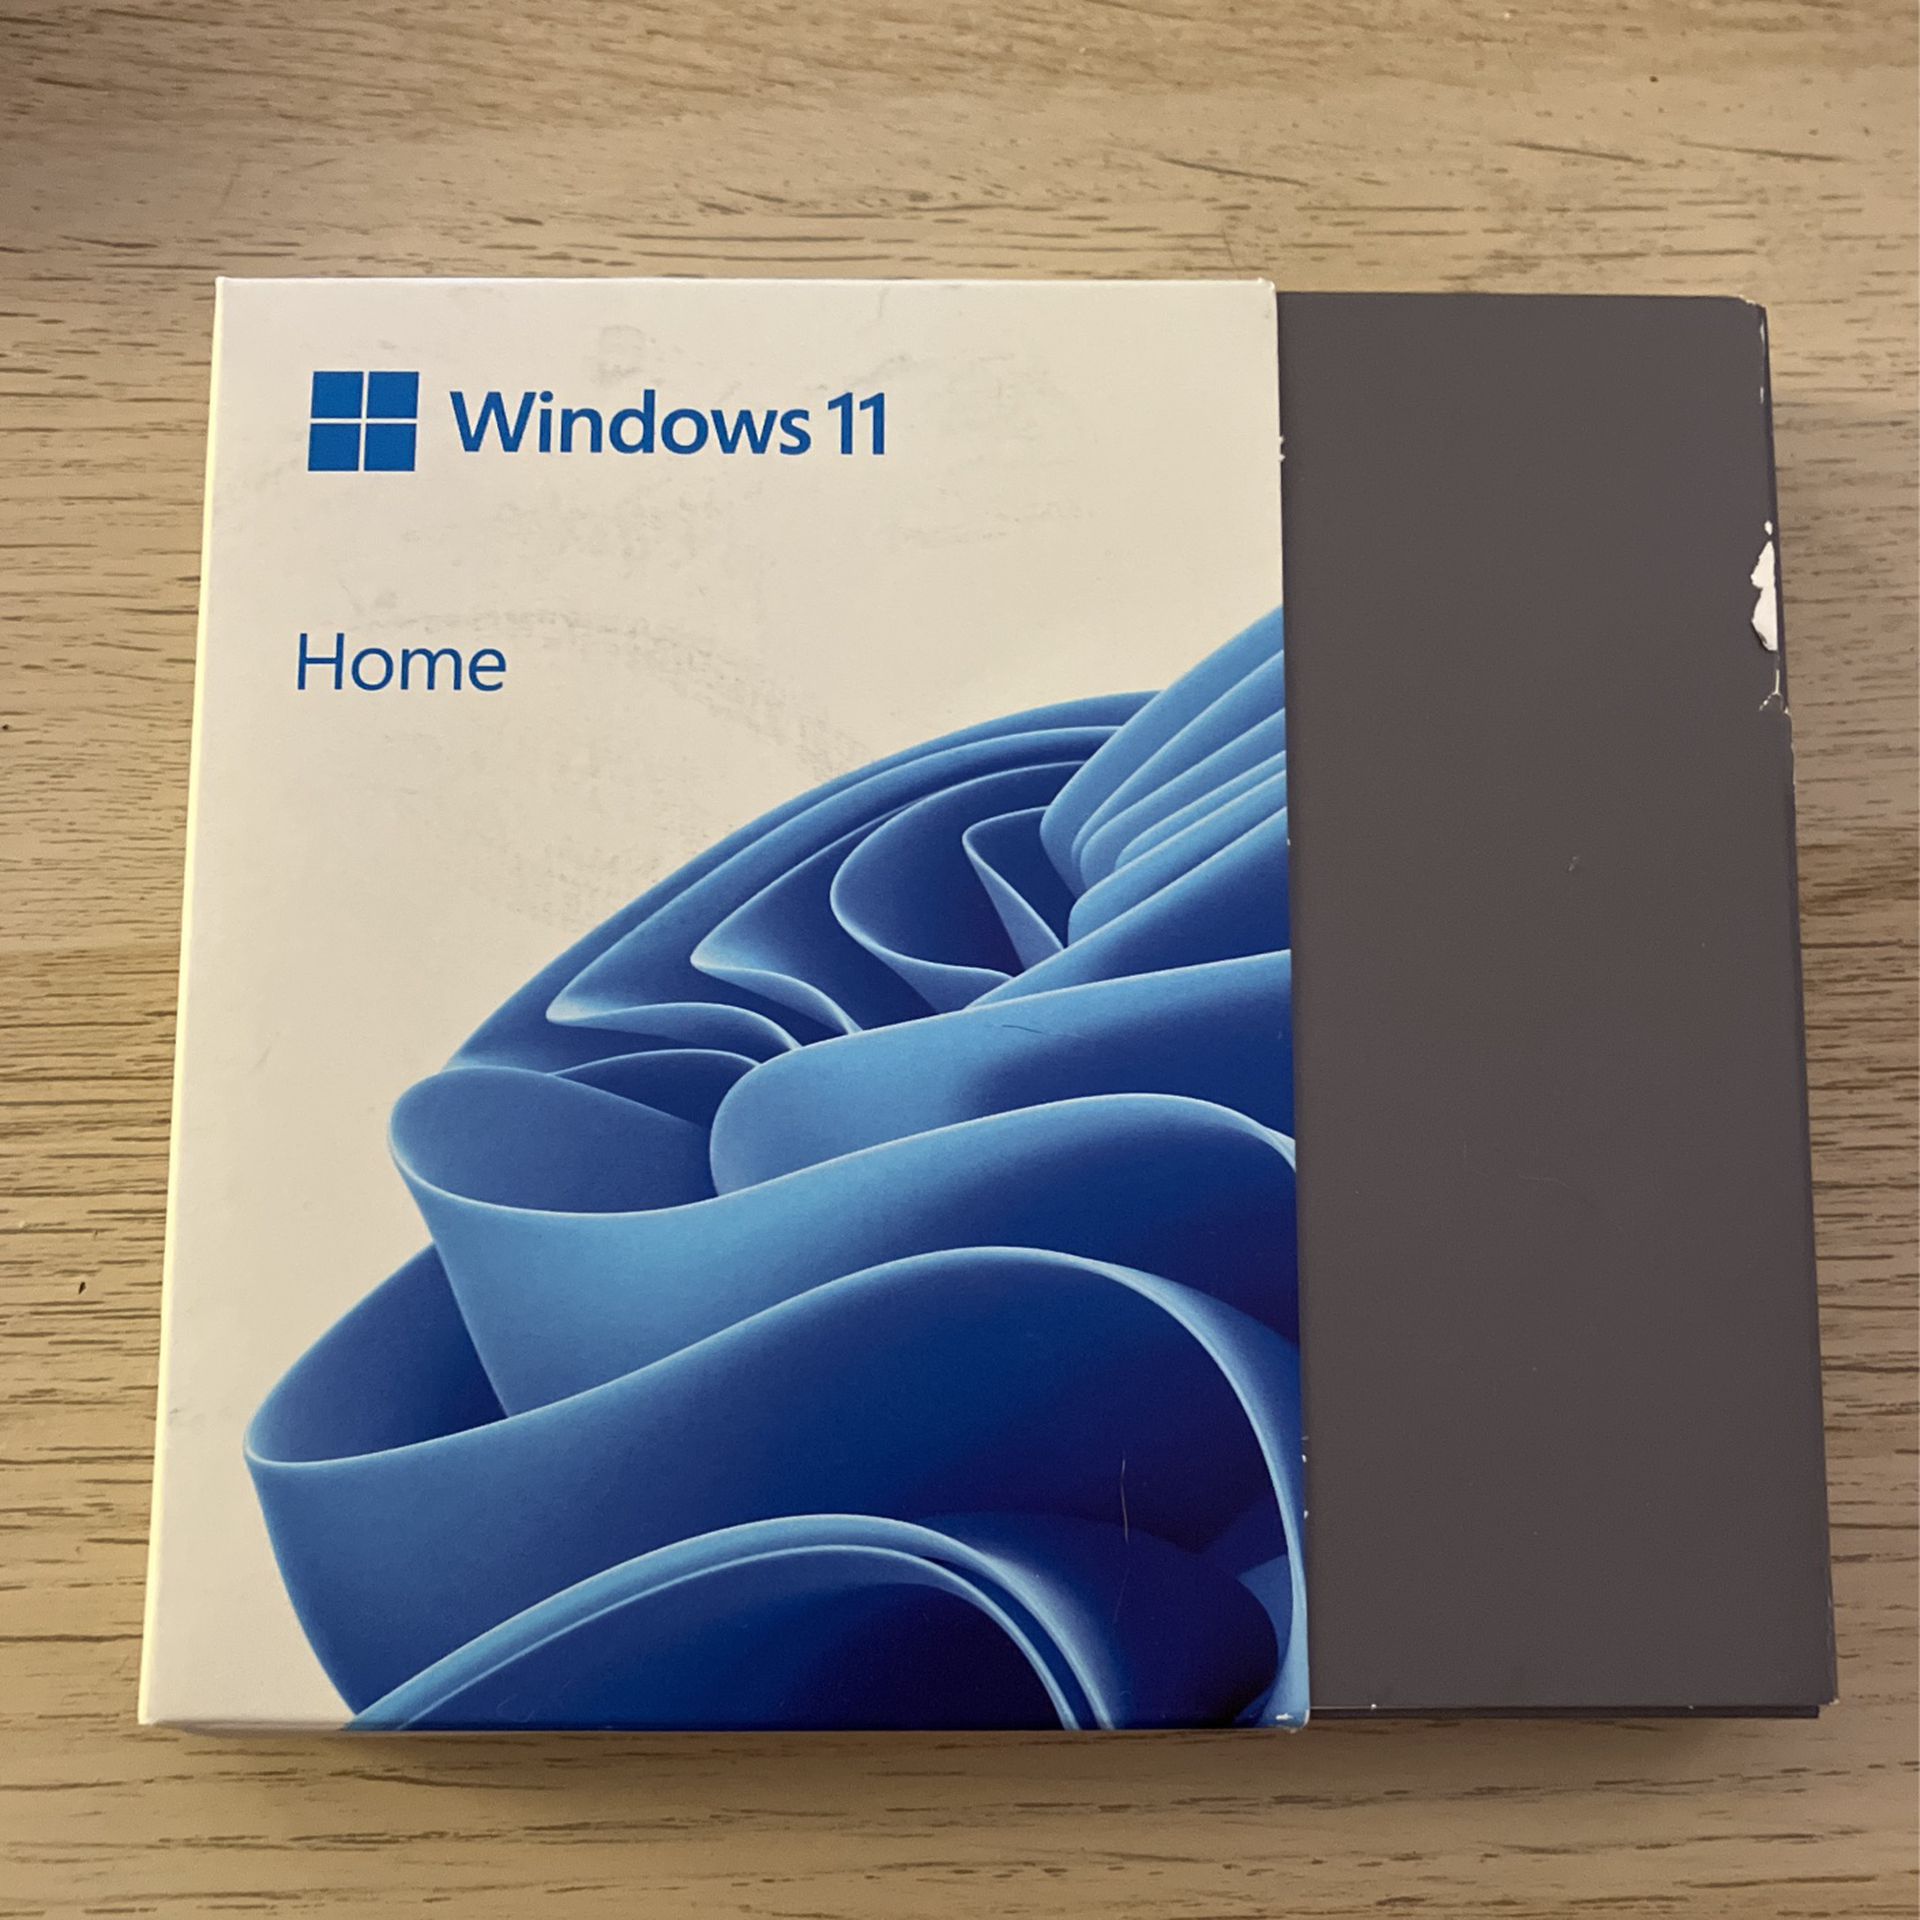 *BEST OFFER* Microsoft - Windows 11 Home - USB Flash Drive - English - Physical - English 